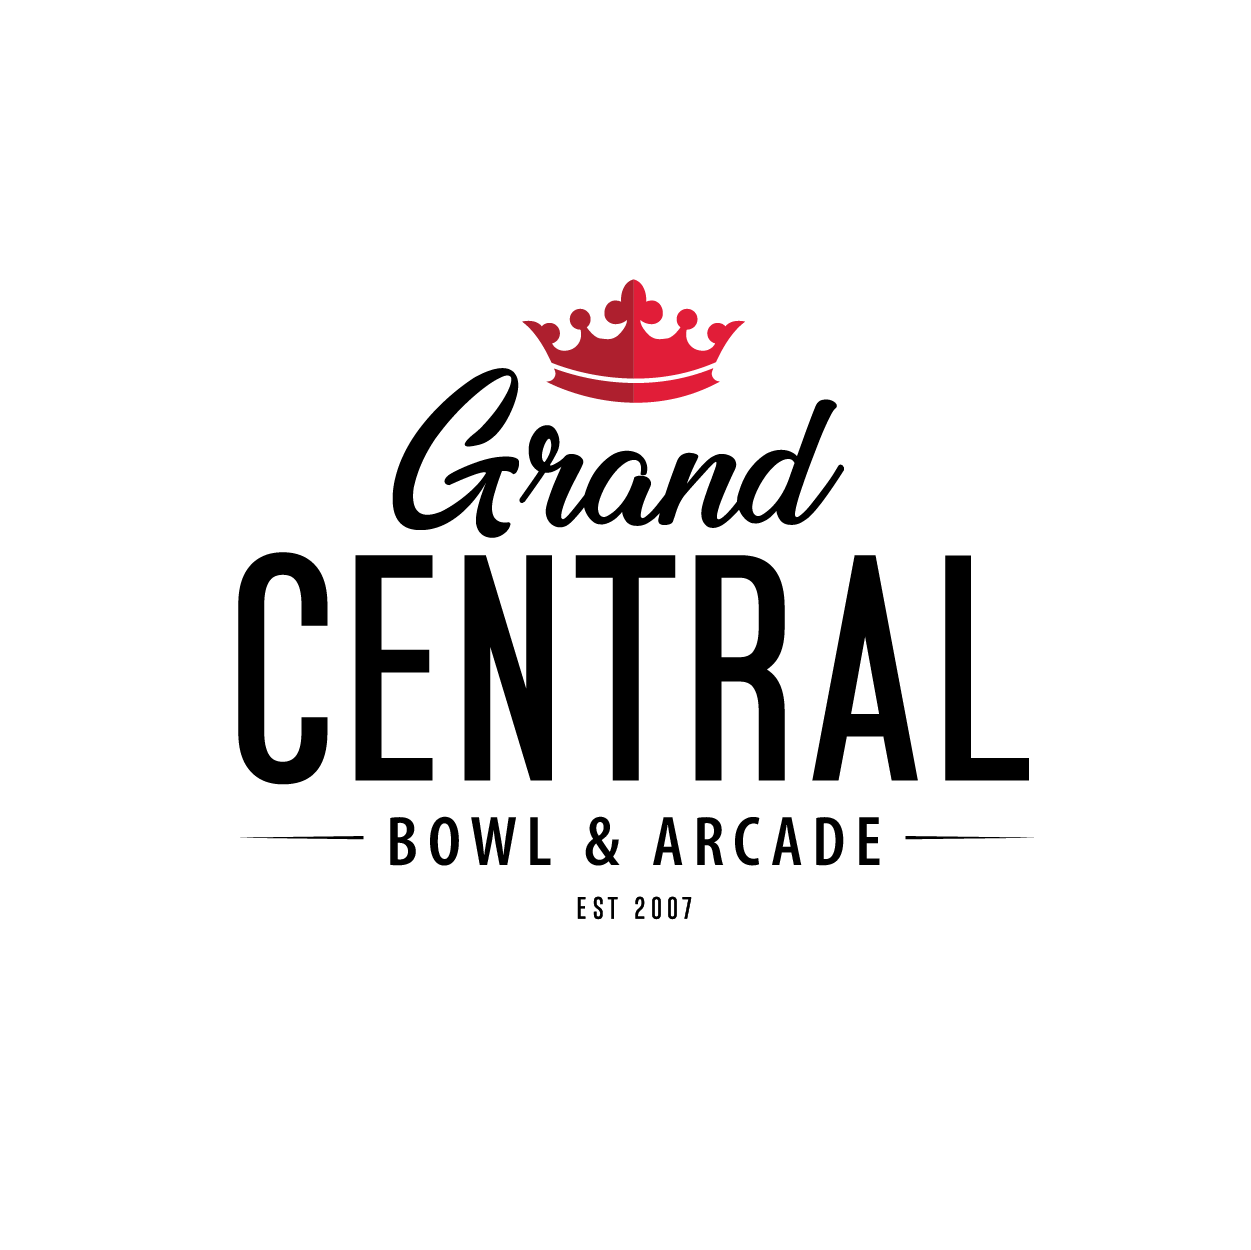 GRAND CENTRAL BOWL